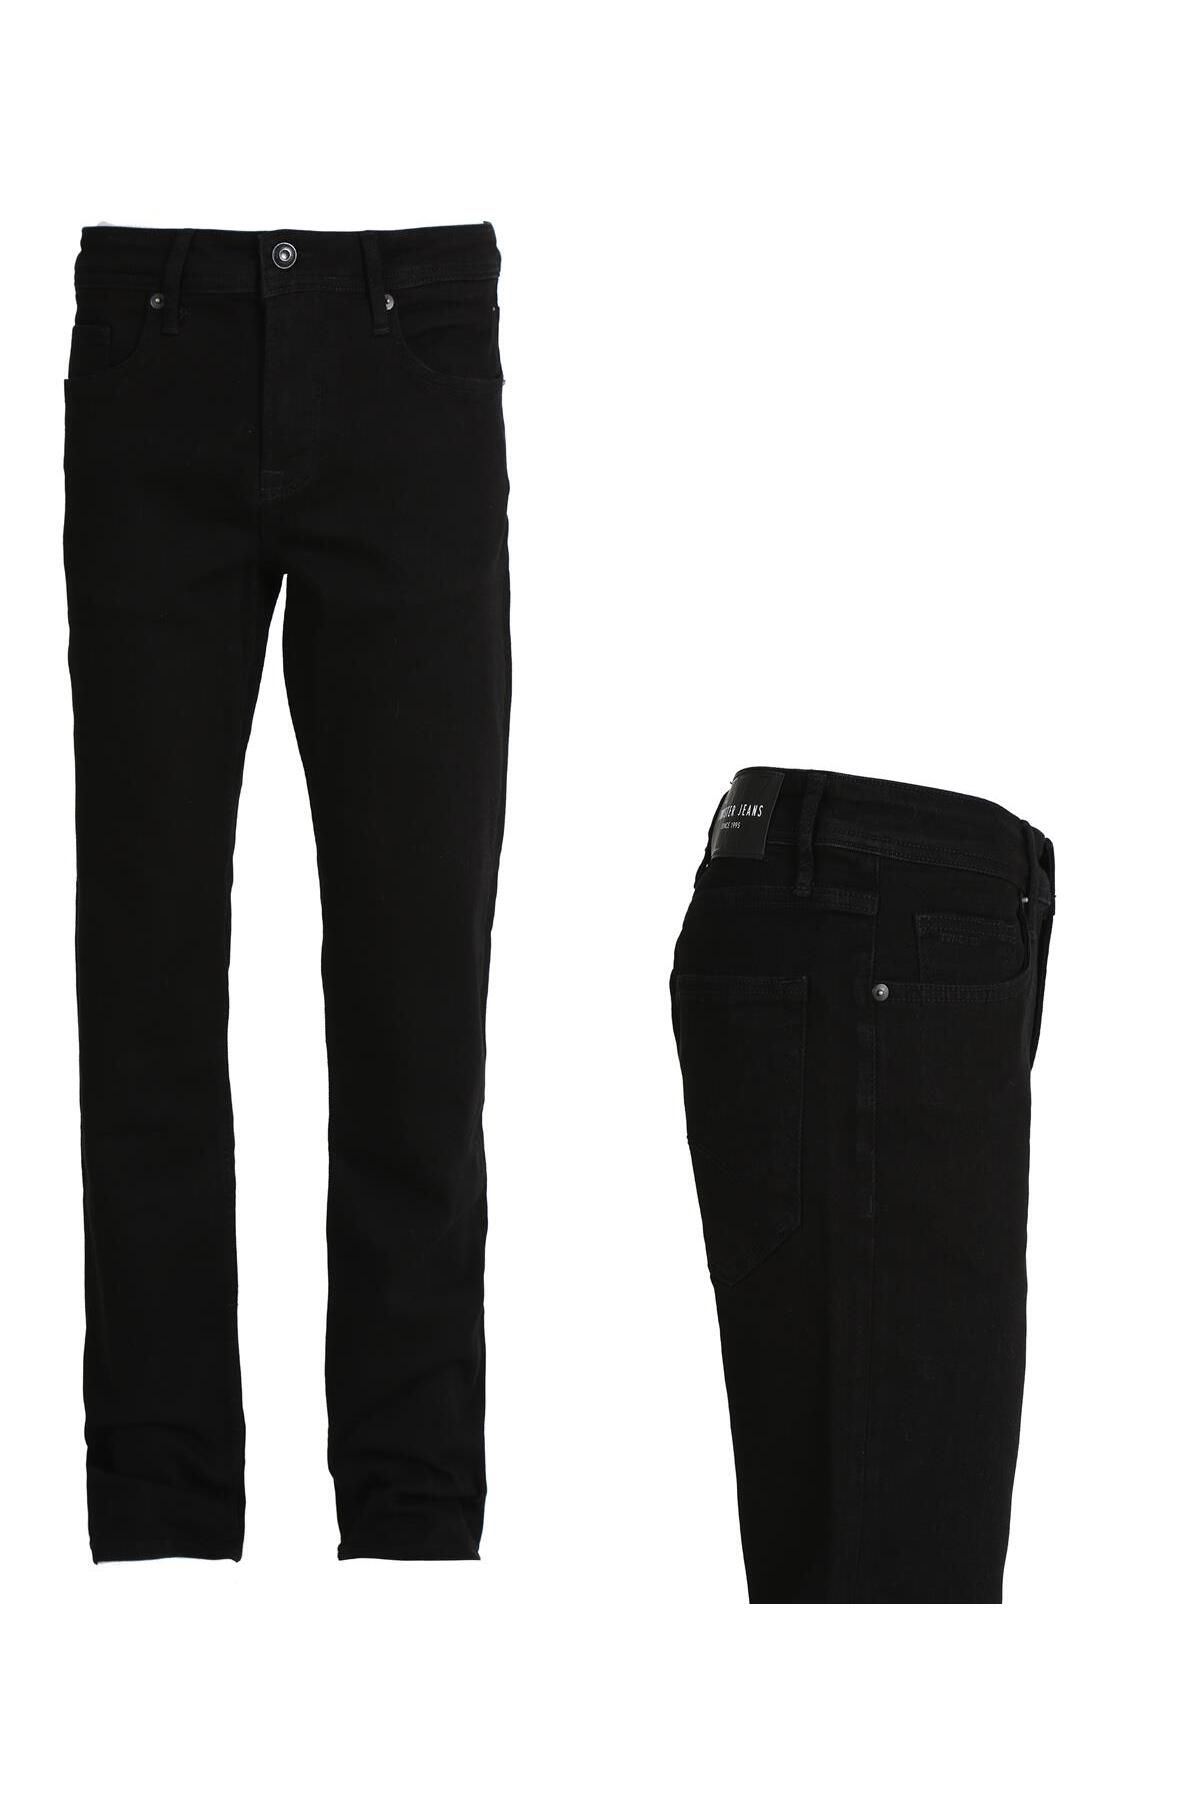 Twister Jeans Erkek Pantolon Martin 673-01 Black Black